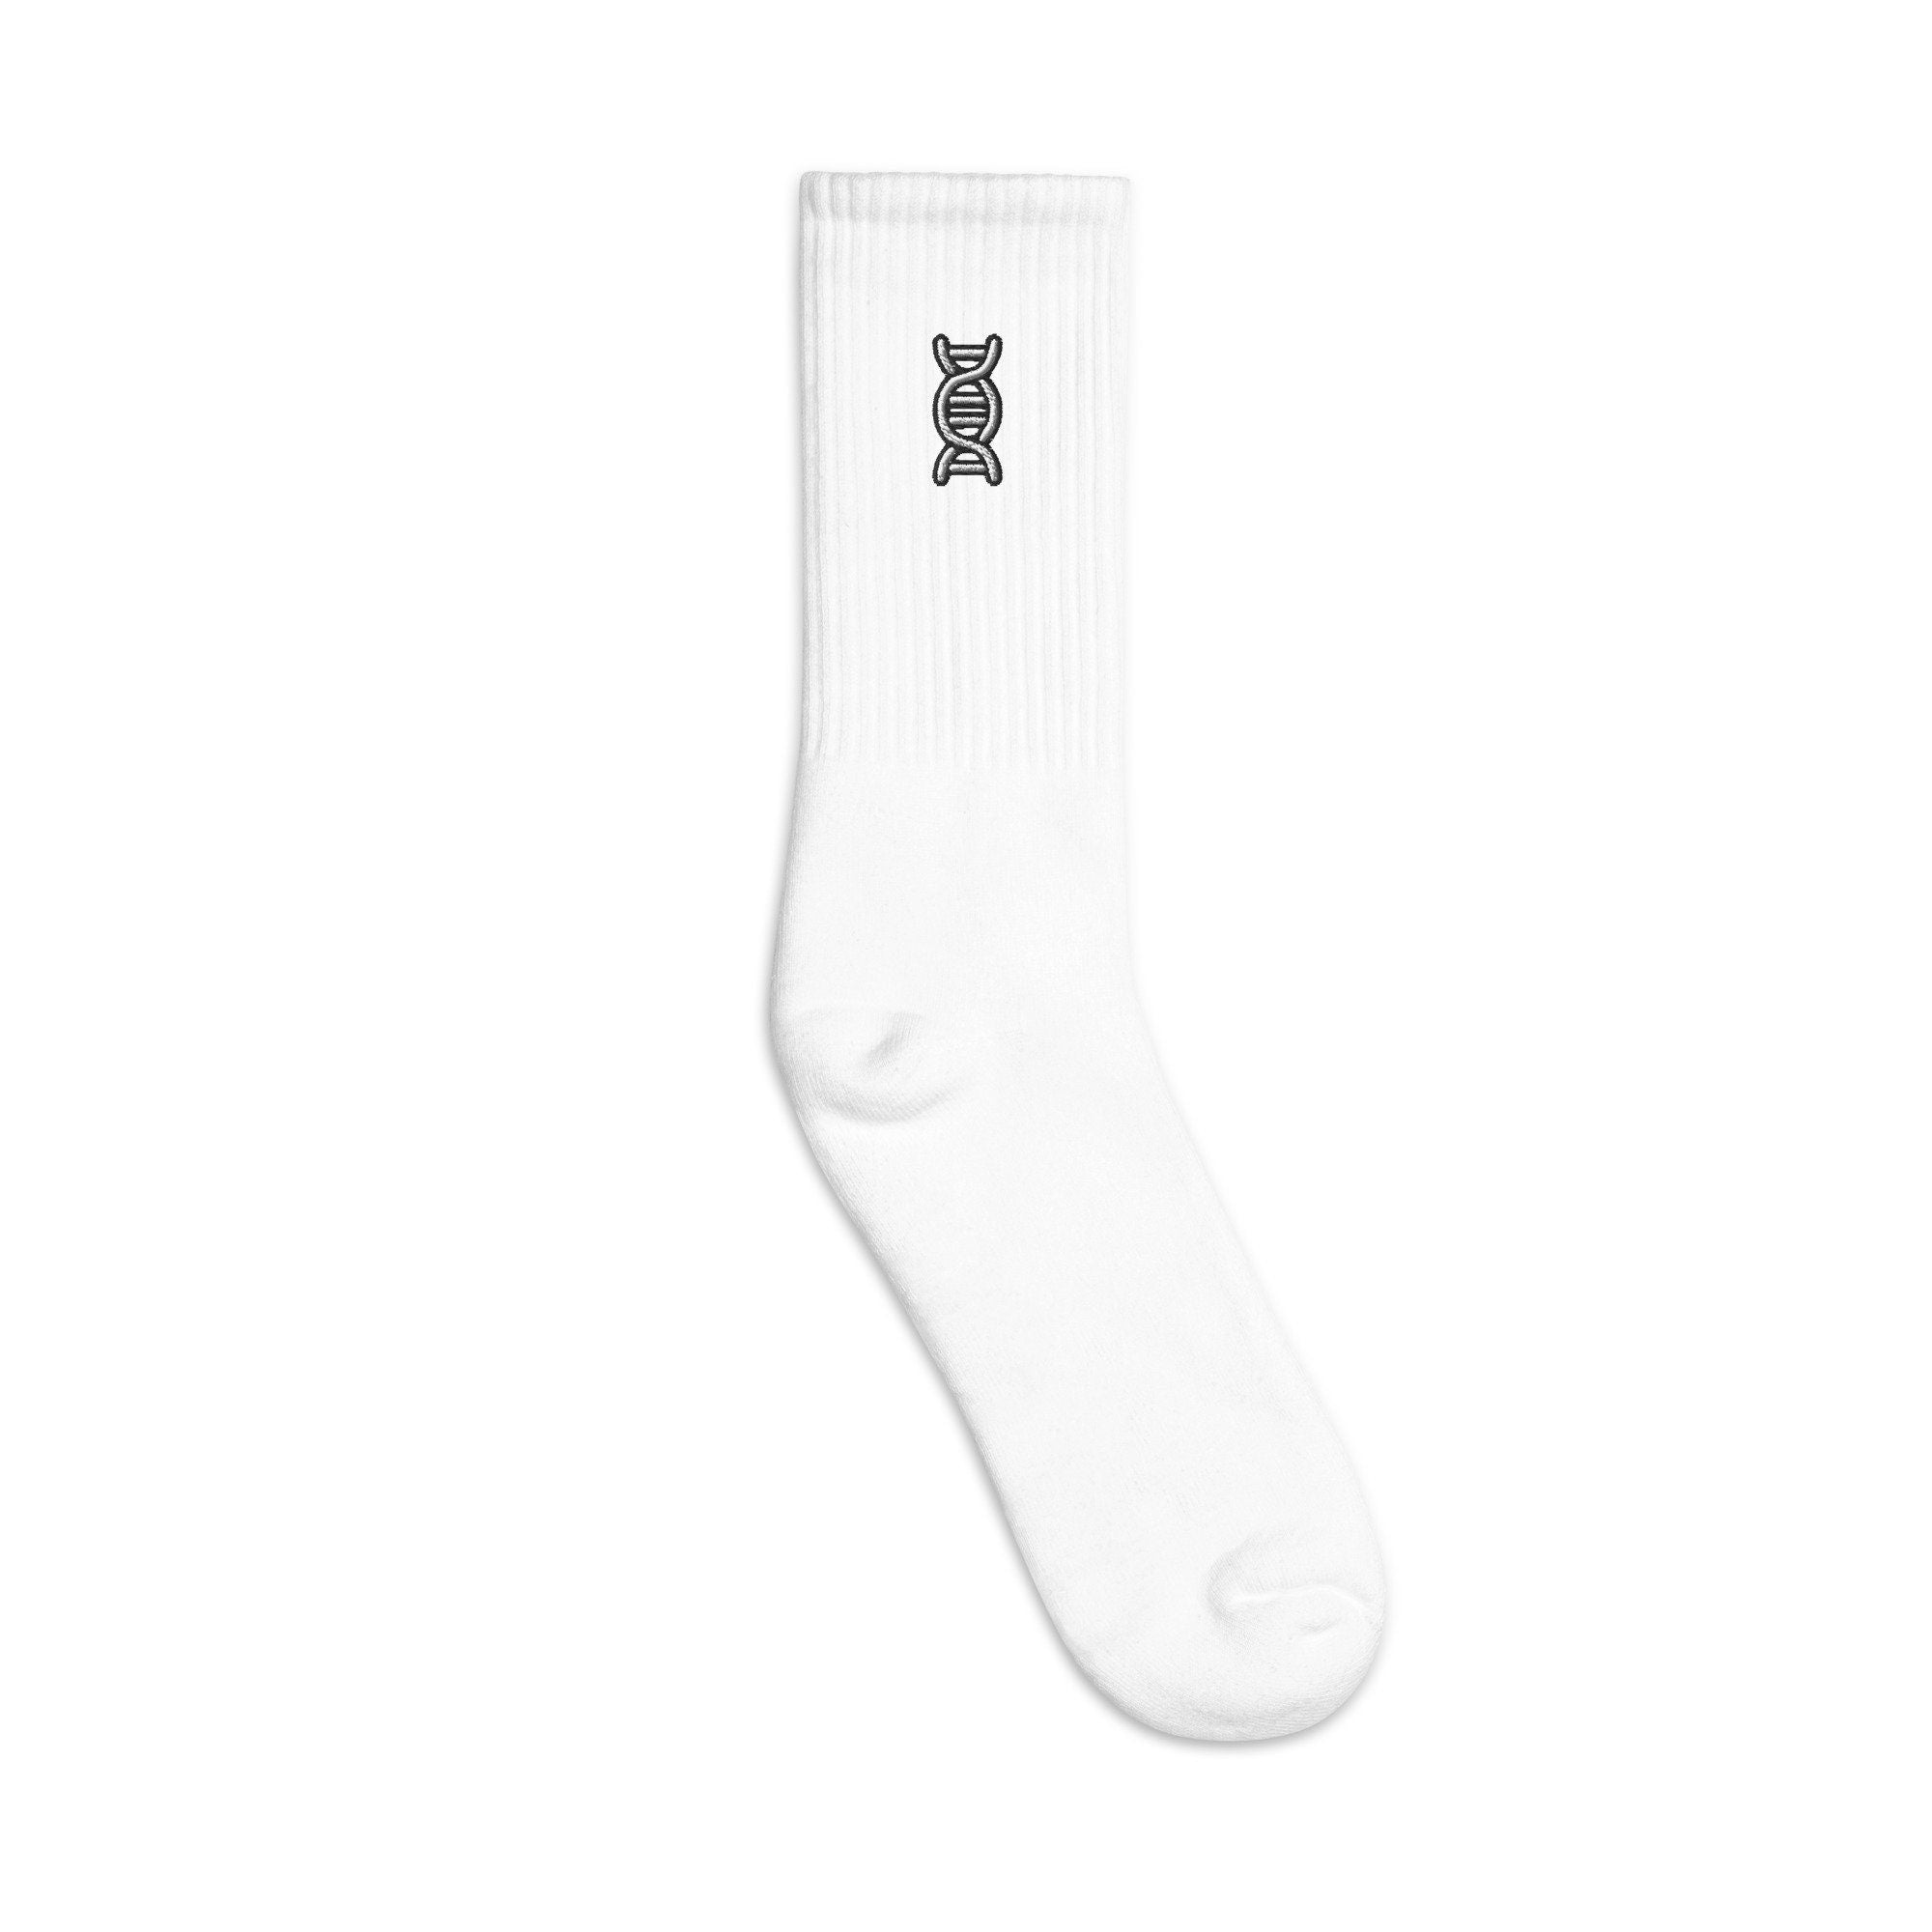 DNA Embroidered Socks, Premium Embroidered Socks, Long Socks Gift - Multiple Colors